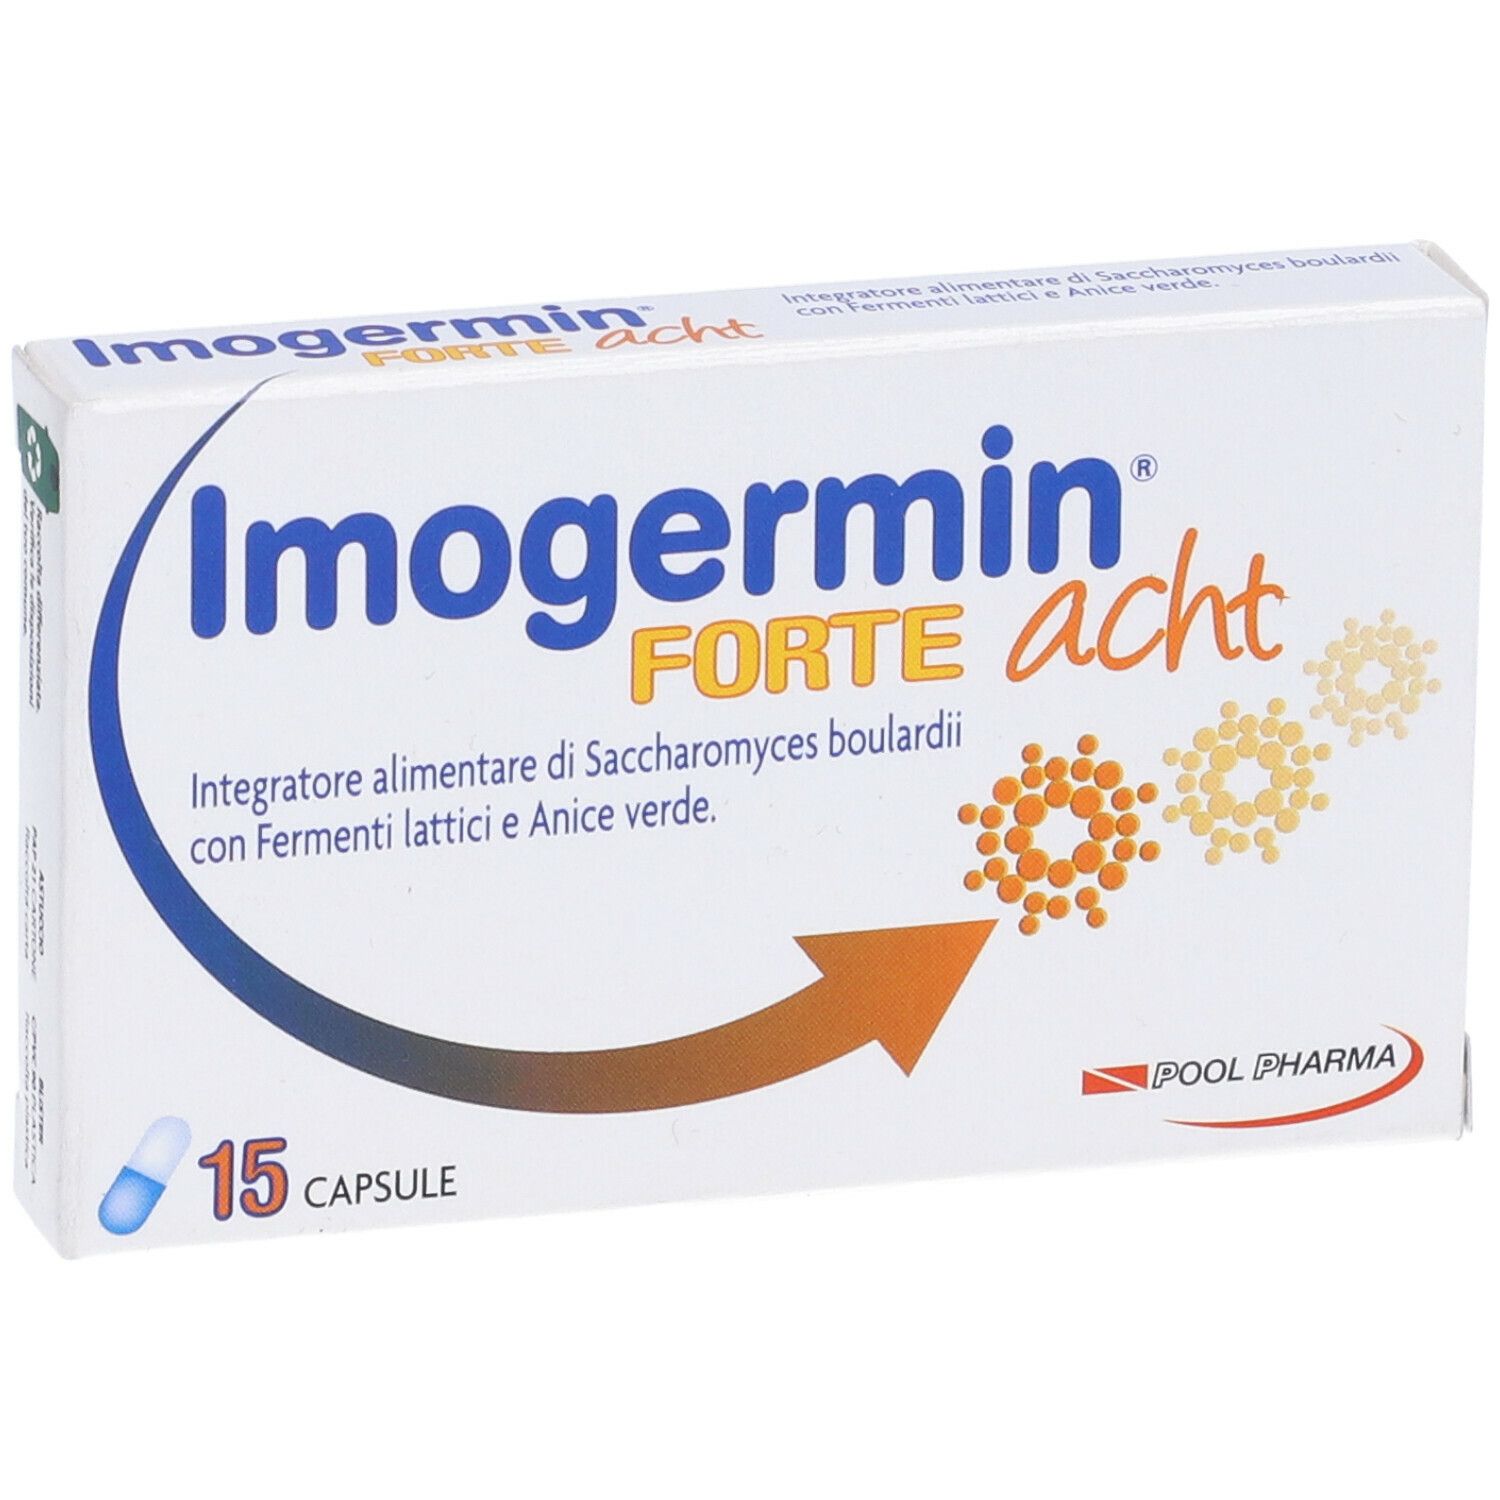 POOL PHARMA Imogermin® Forte ACHT